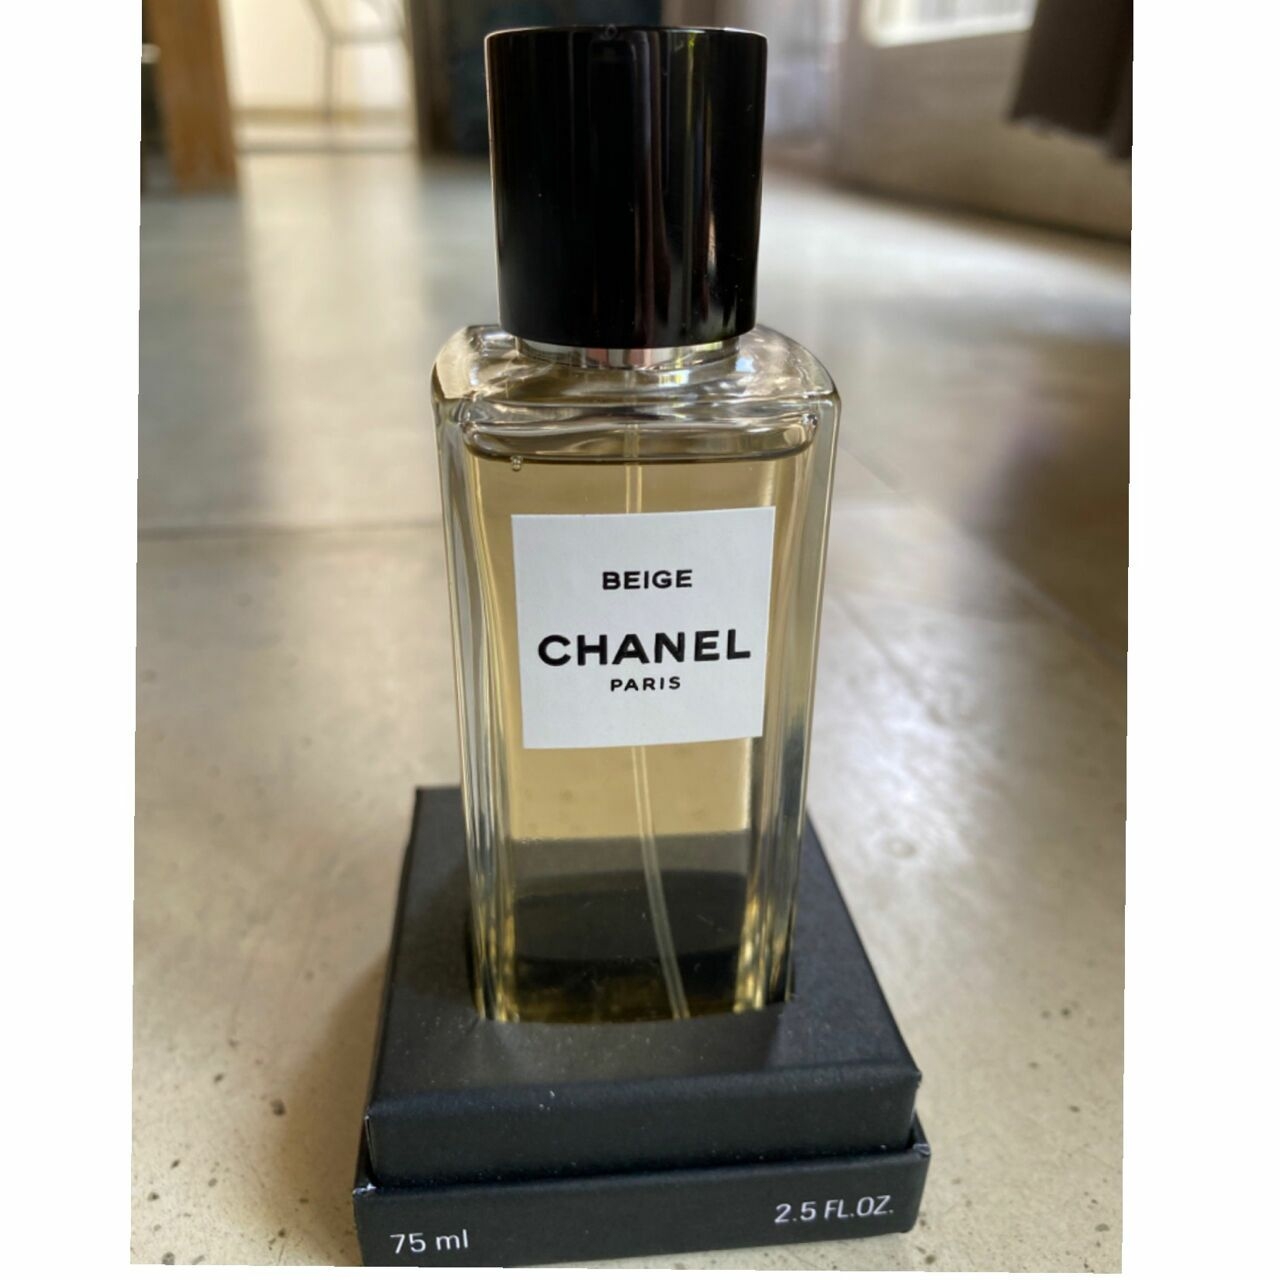 Chanel Beige Fragrance